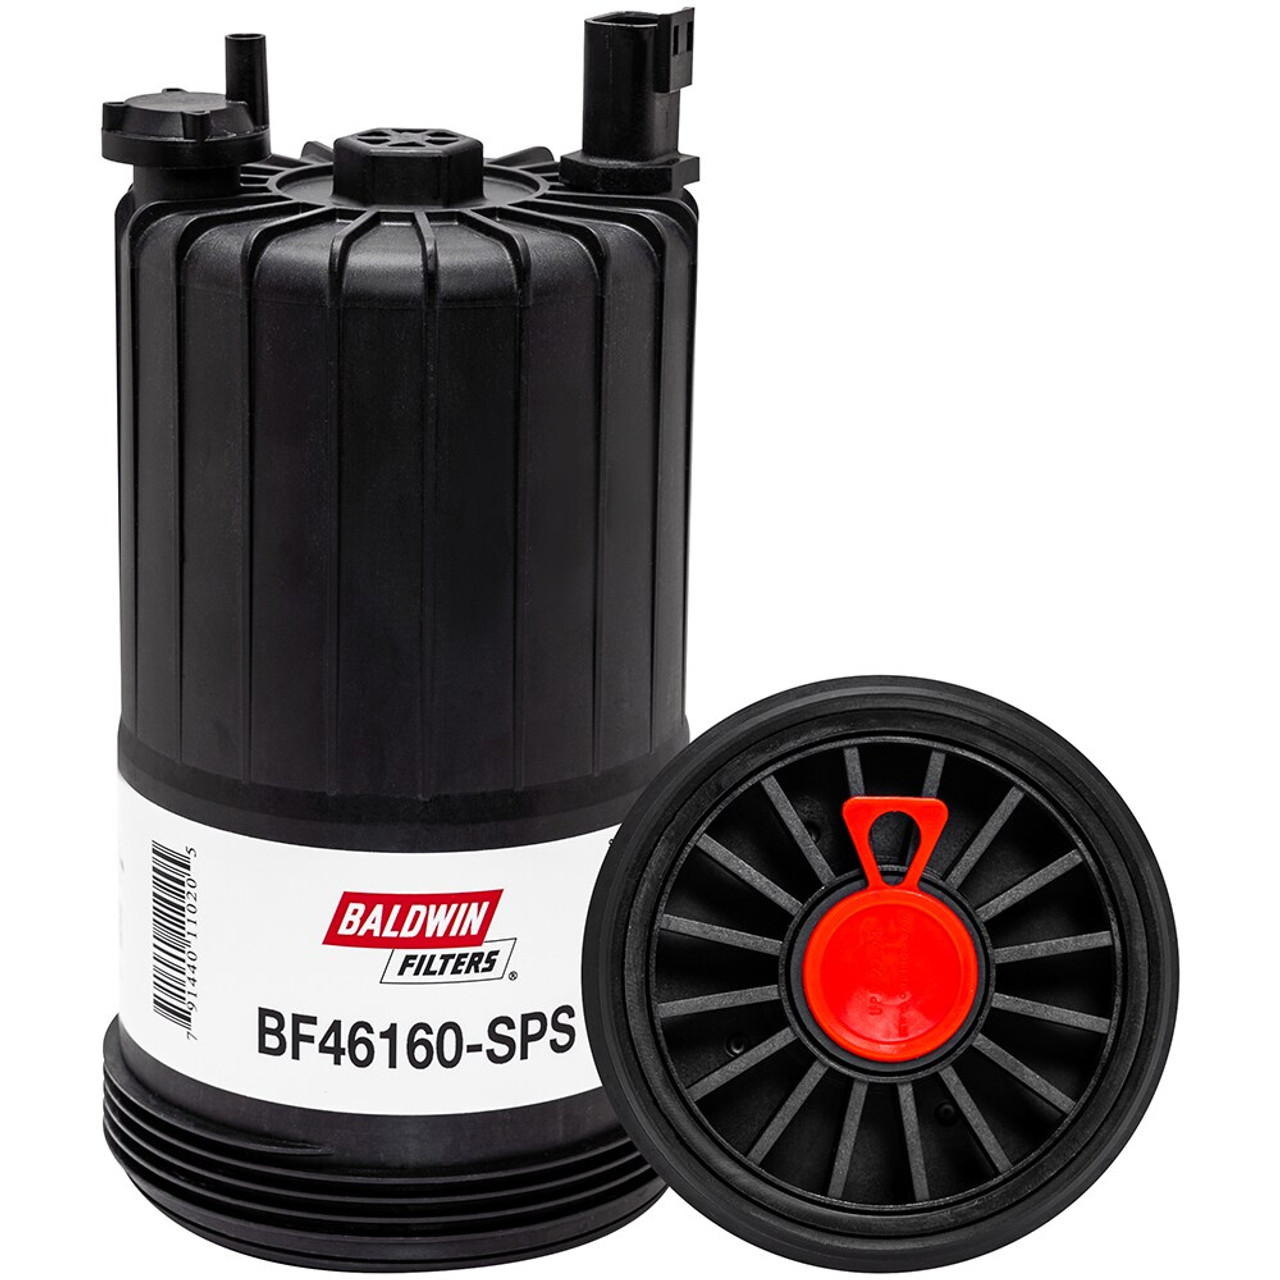 Baldwin BF46160-SPS Fuel Filter- Replaces Cummins / Fleetguard FS1098